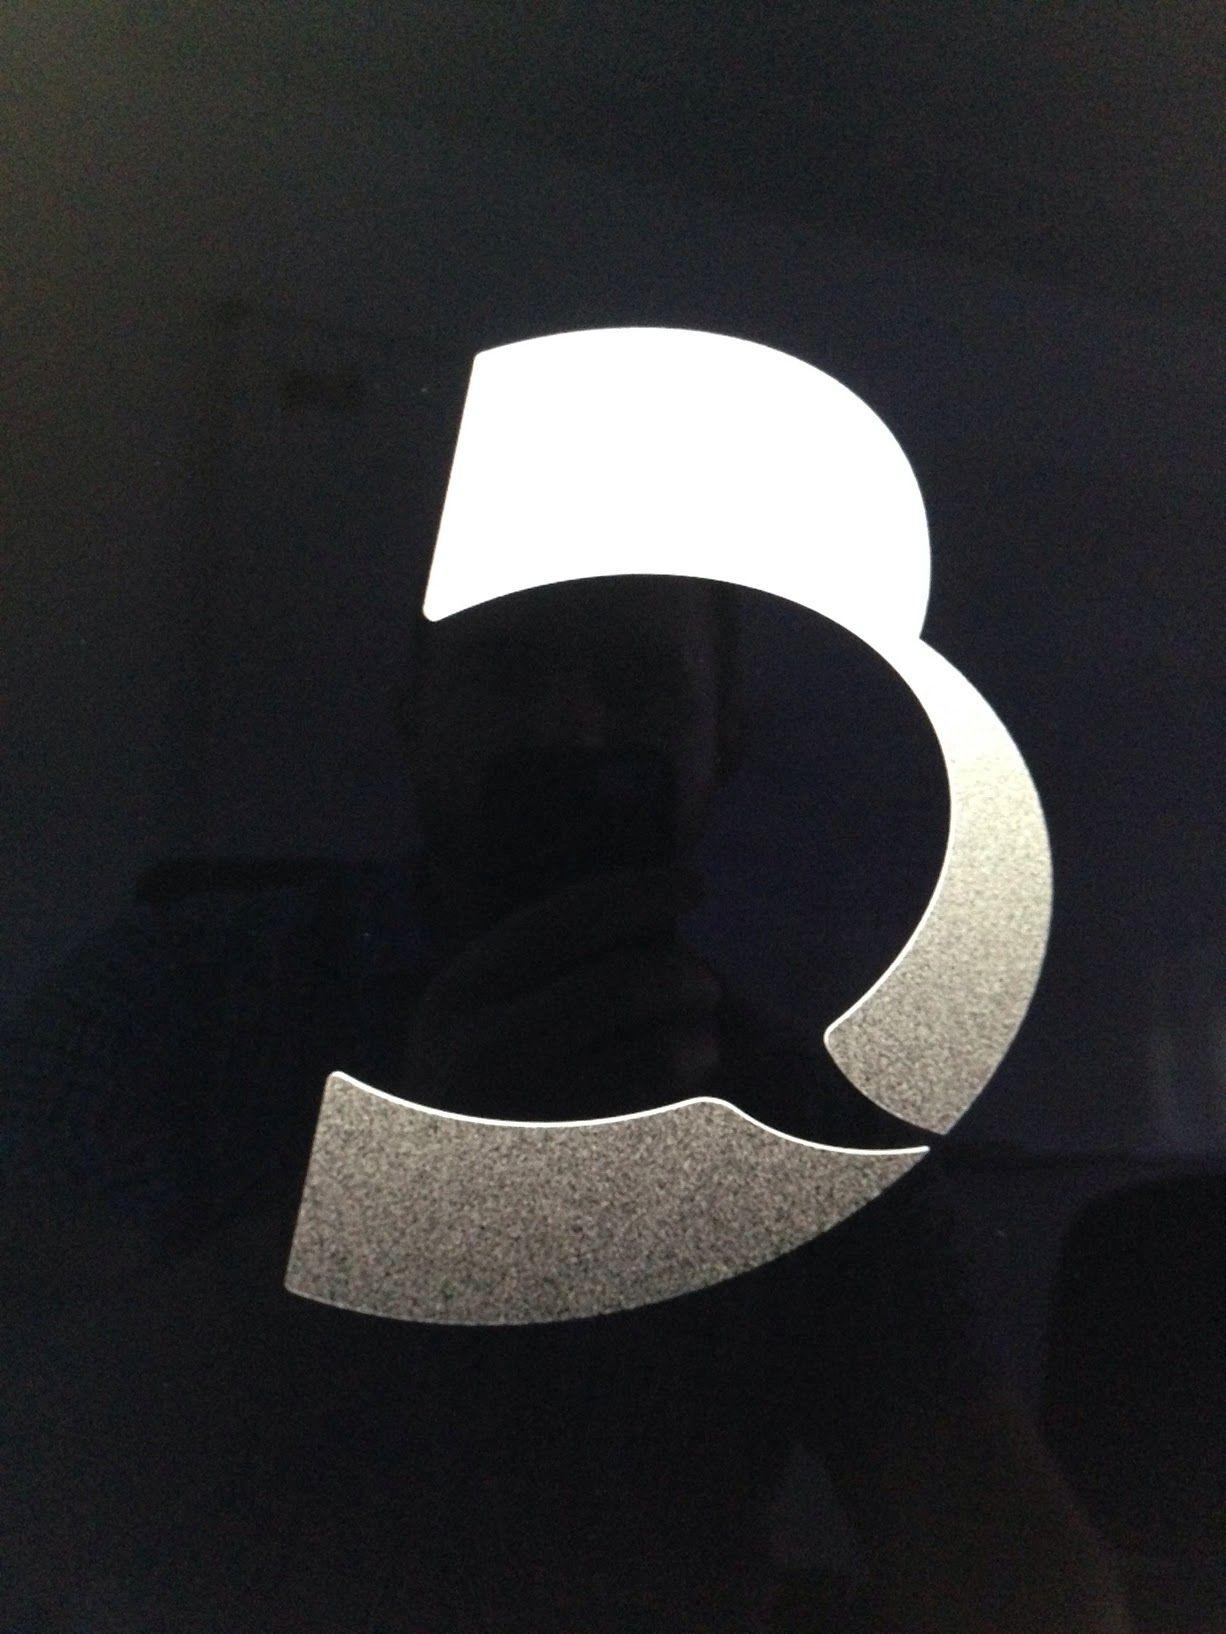 Bq Logo - BQ logo proposal #design #logo #chat #book #dialog #concept | Design ...